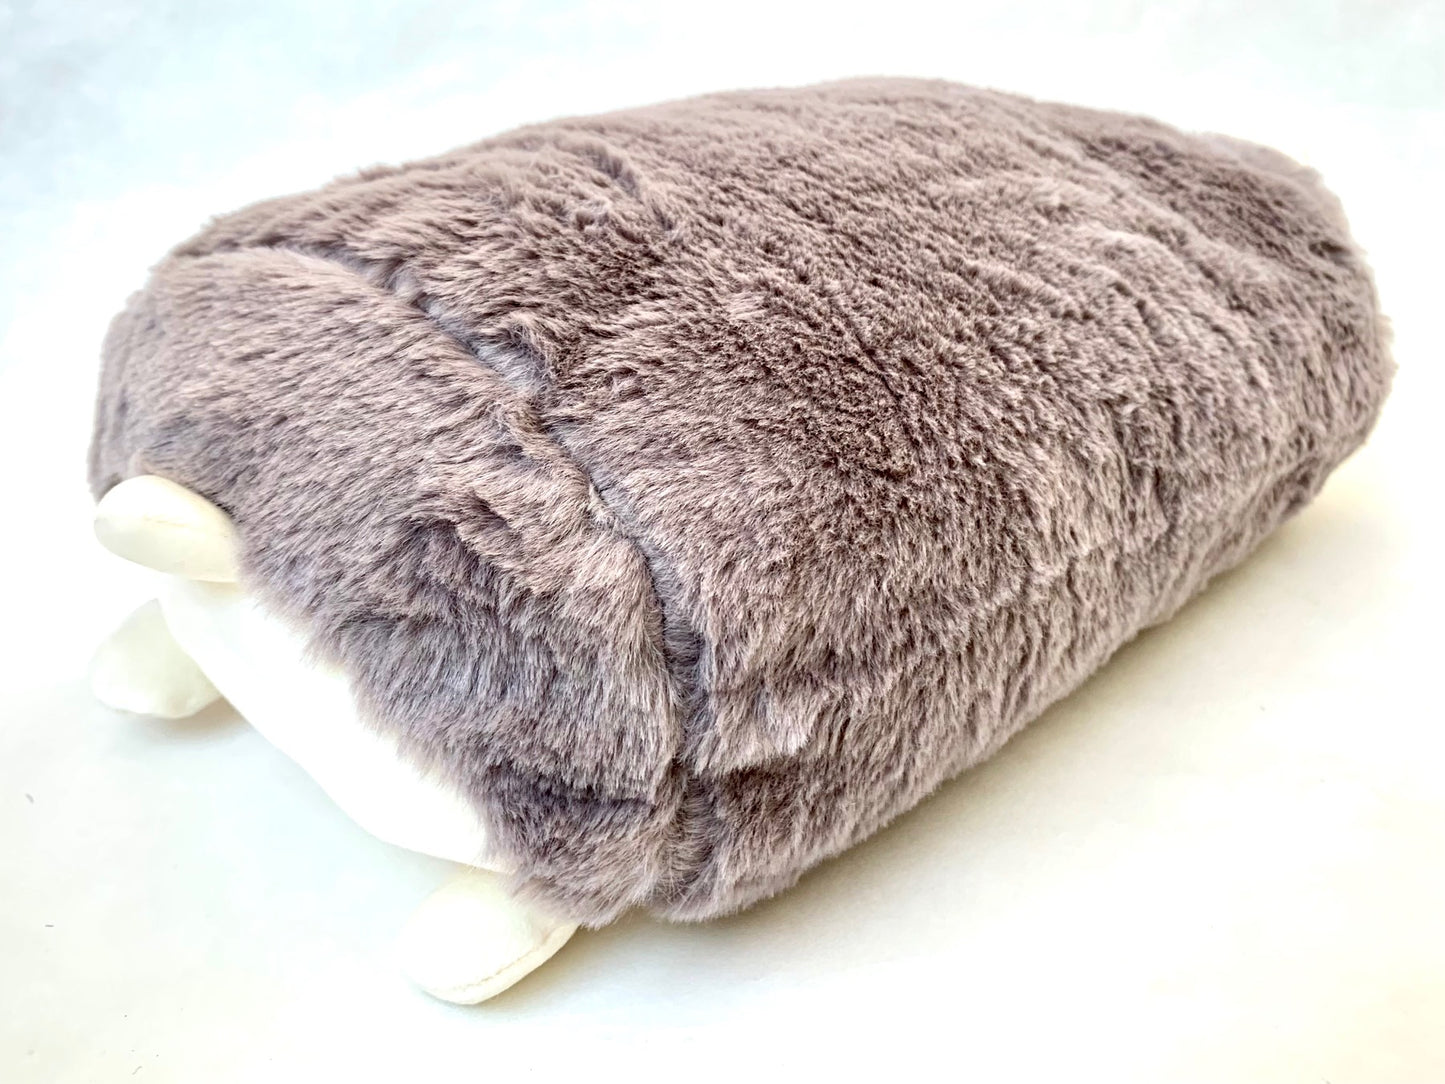 X 63258 CRUX Hedgehog Pillow Plush-DISCONTINUED